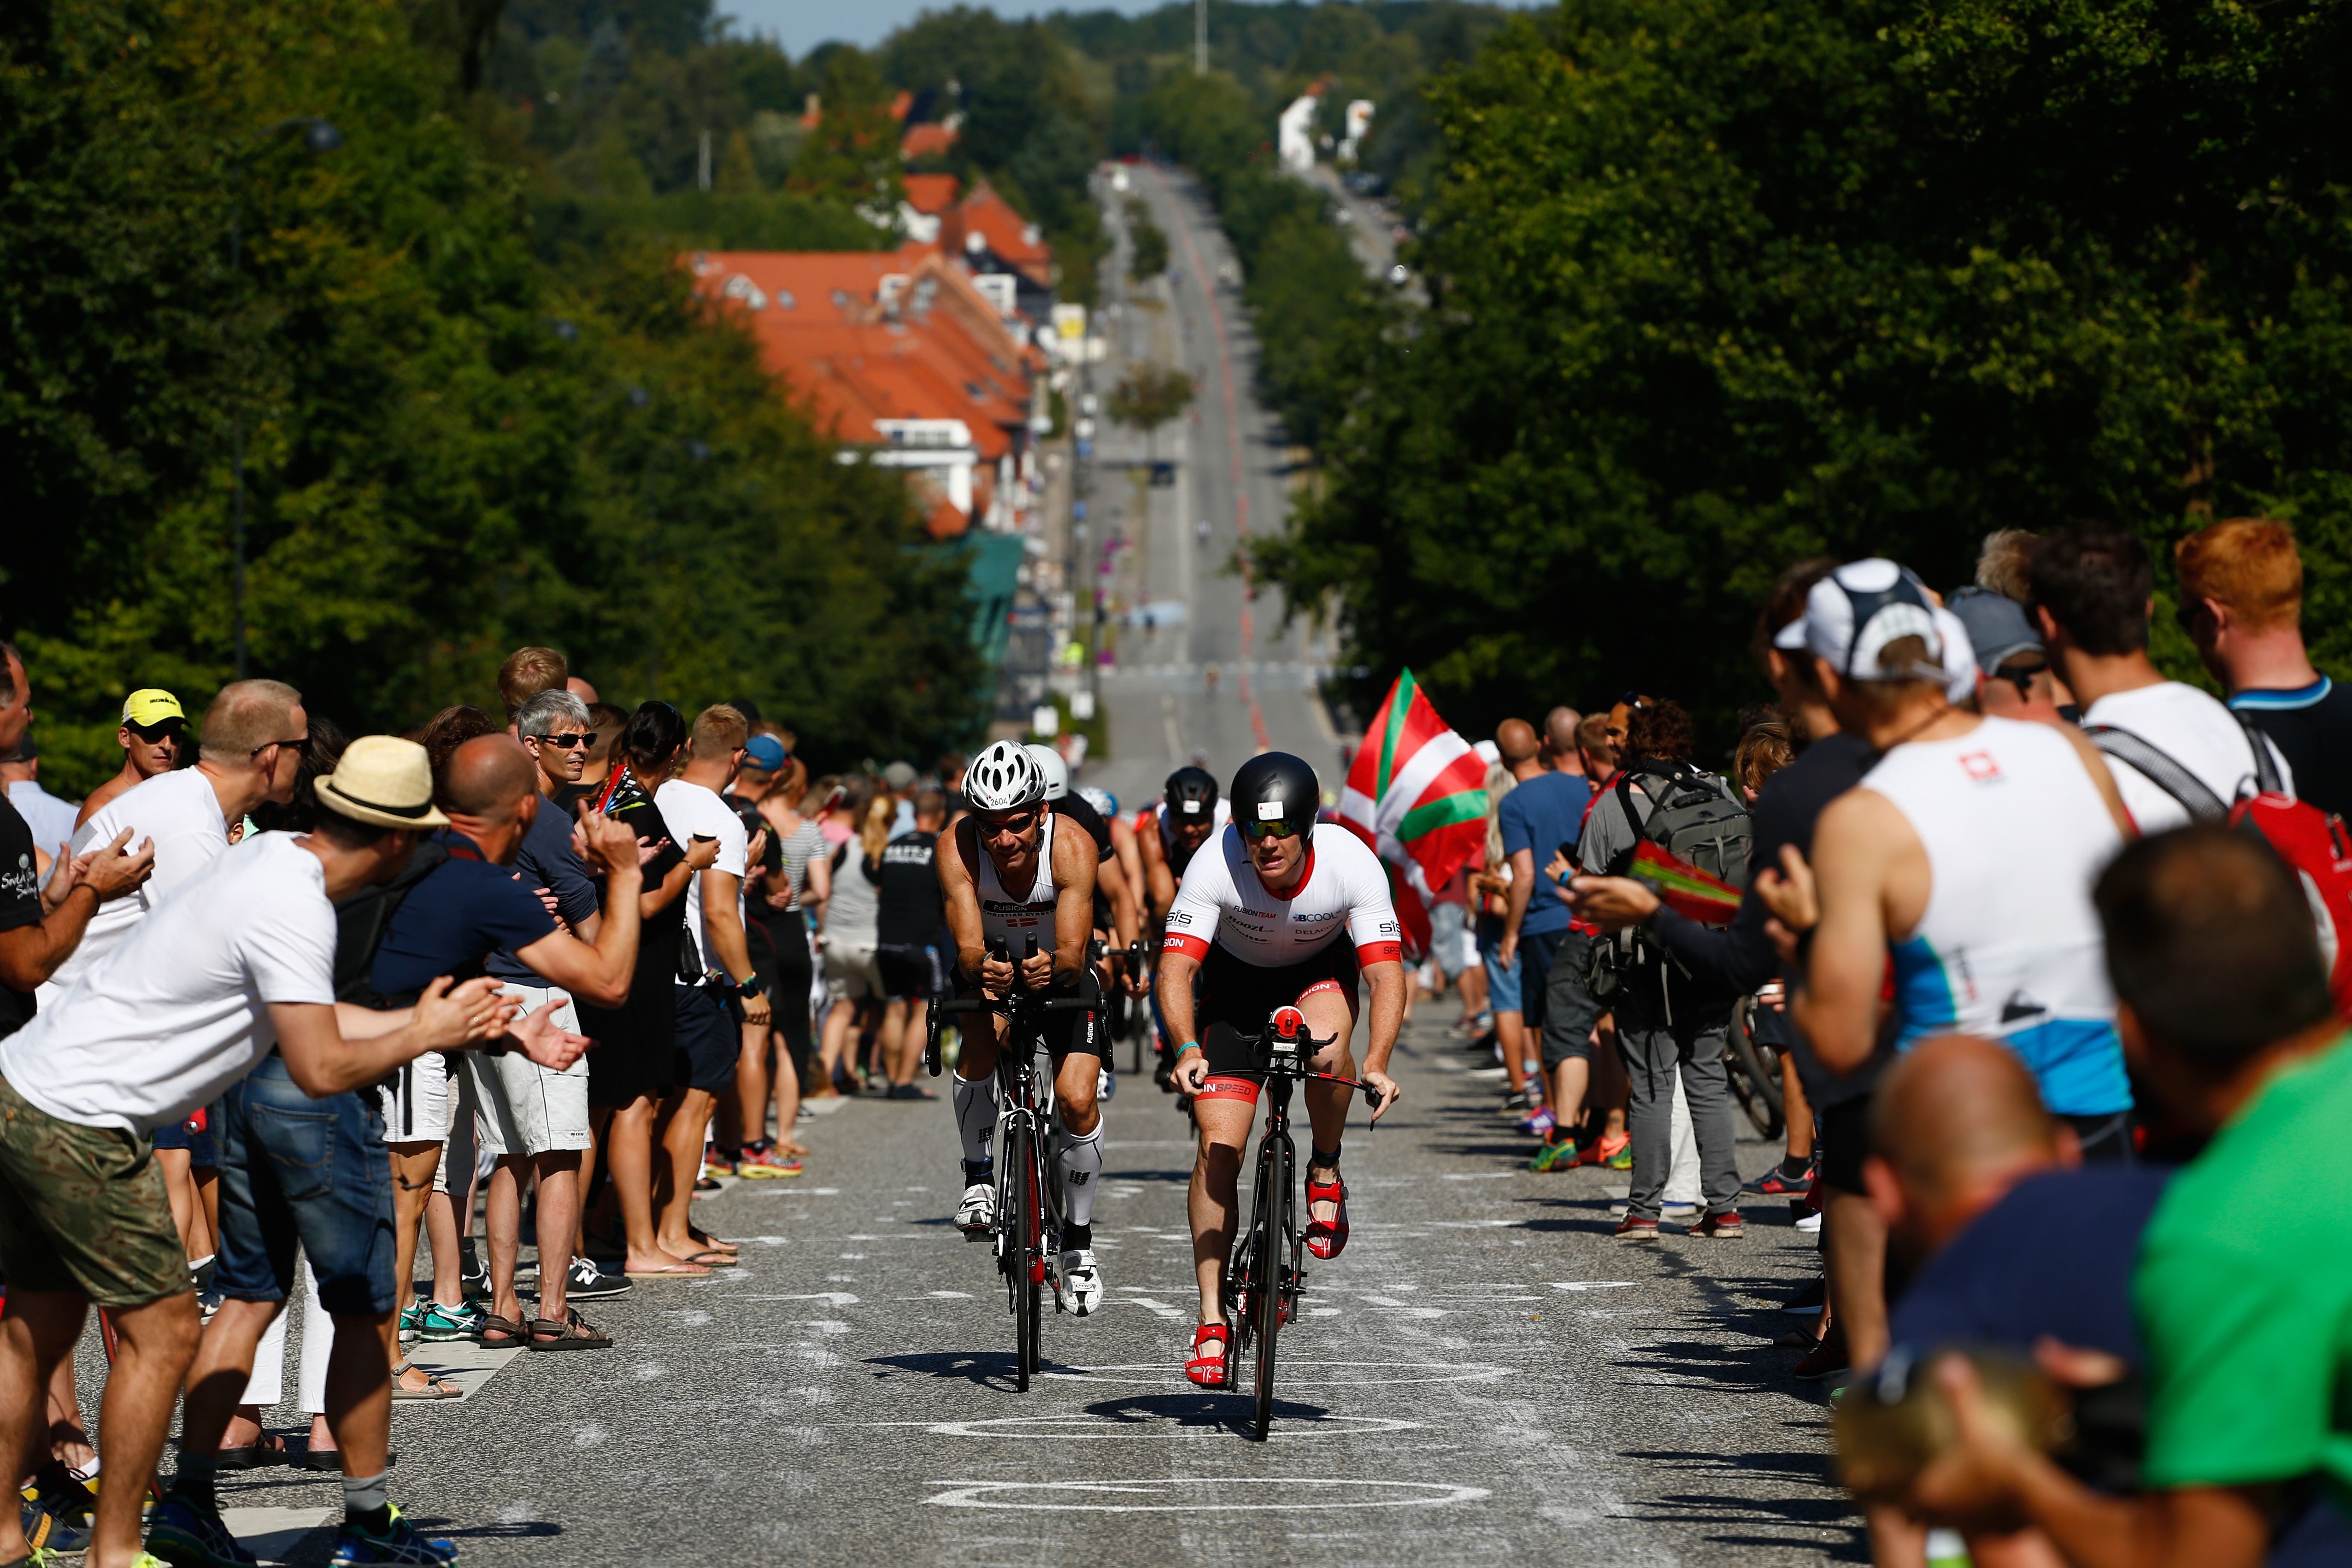 Copenhagen hosting the world’s largest triathlon event